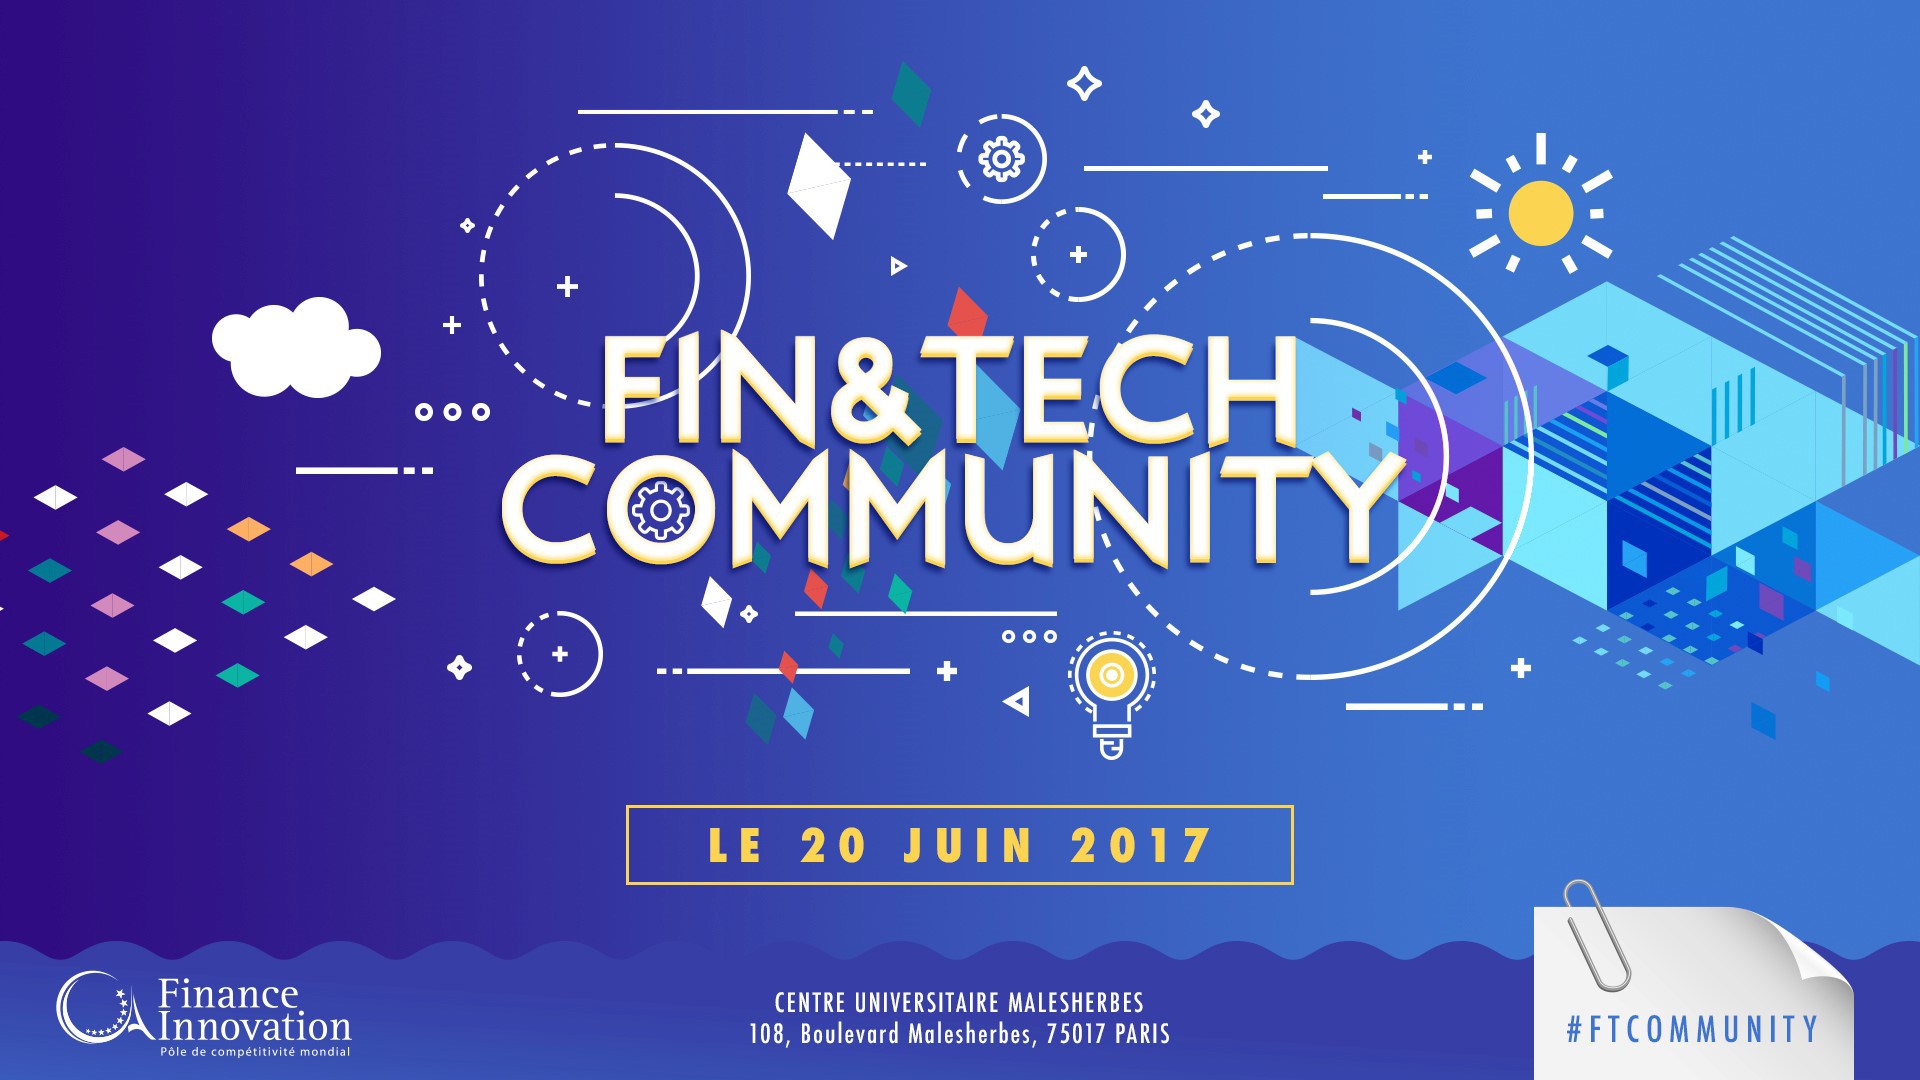 Finance Innovation labellise 53 nouvelles Fintech